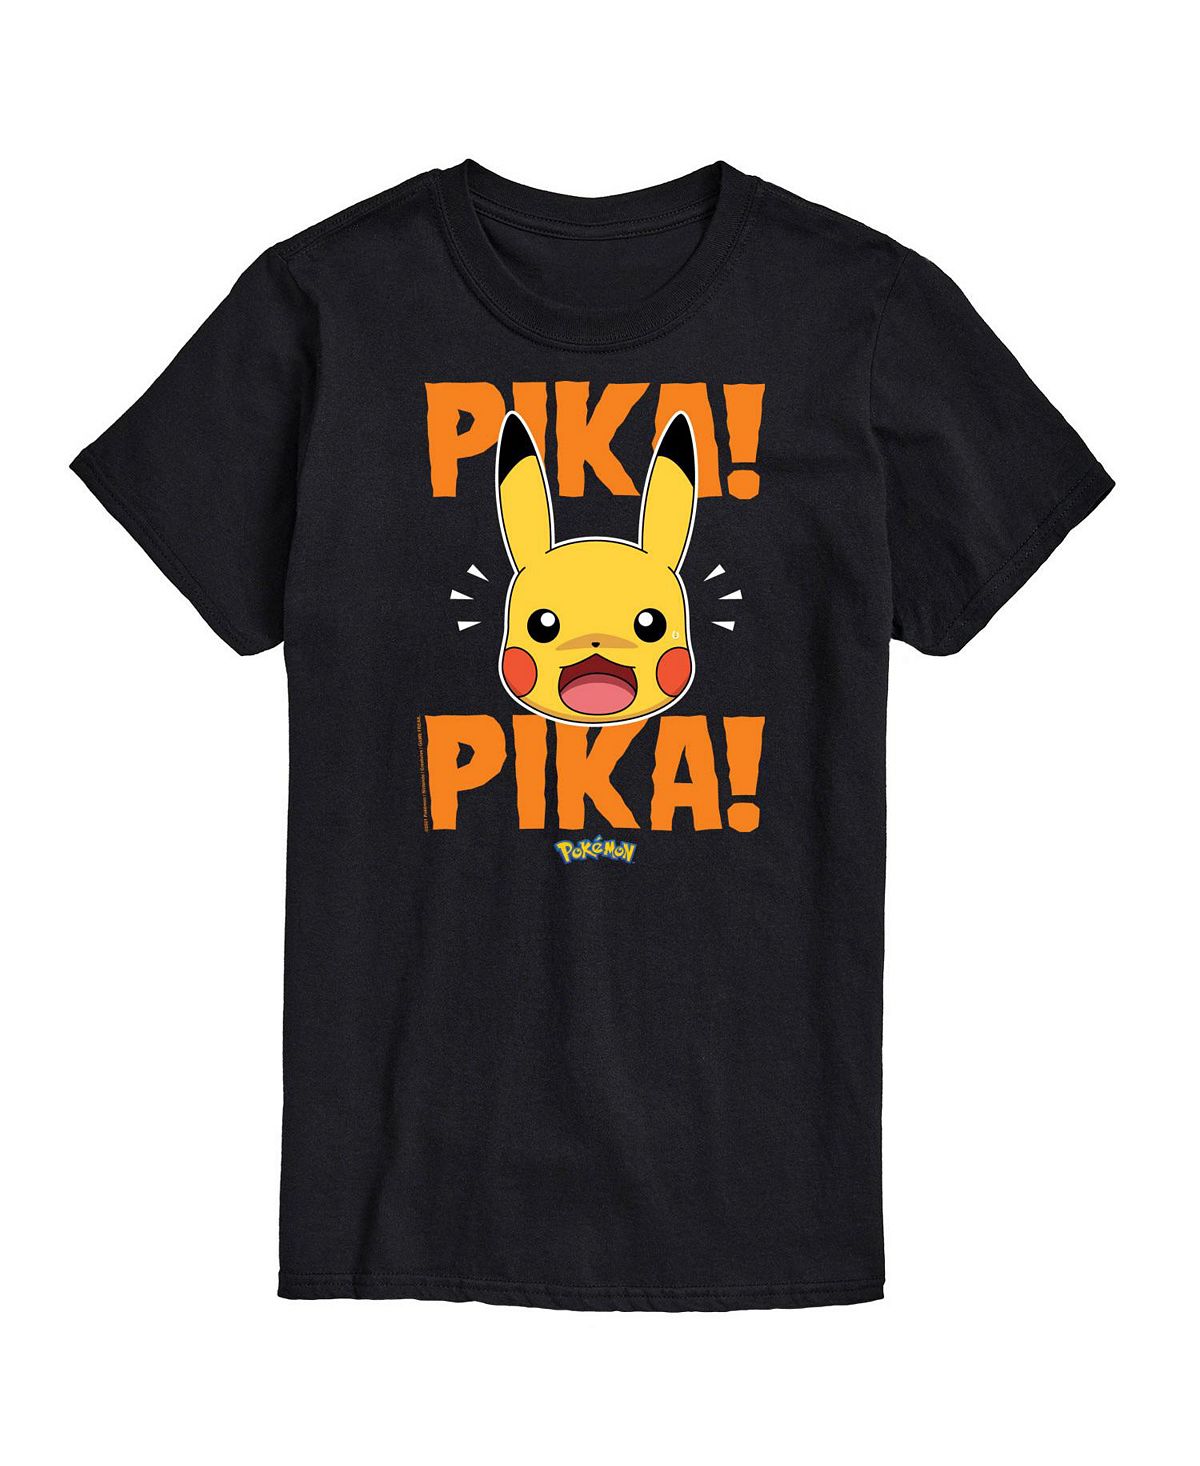 Мужская футболка с короткими рукавами pokemon pika pika AIRWAVES, черный набор pokemon футболка obstagoon punk серая s бейсболка angry pika